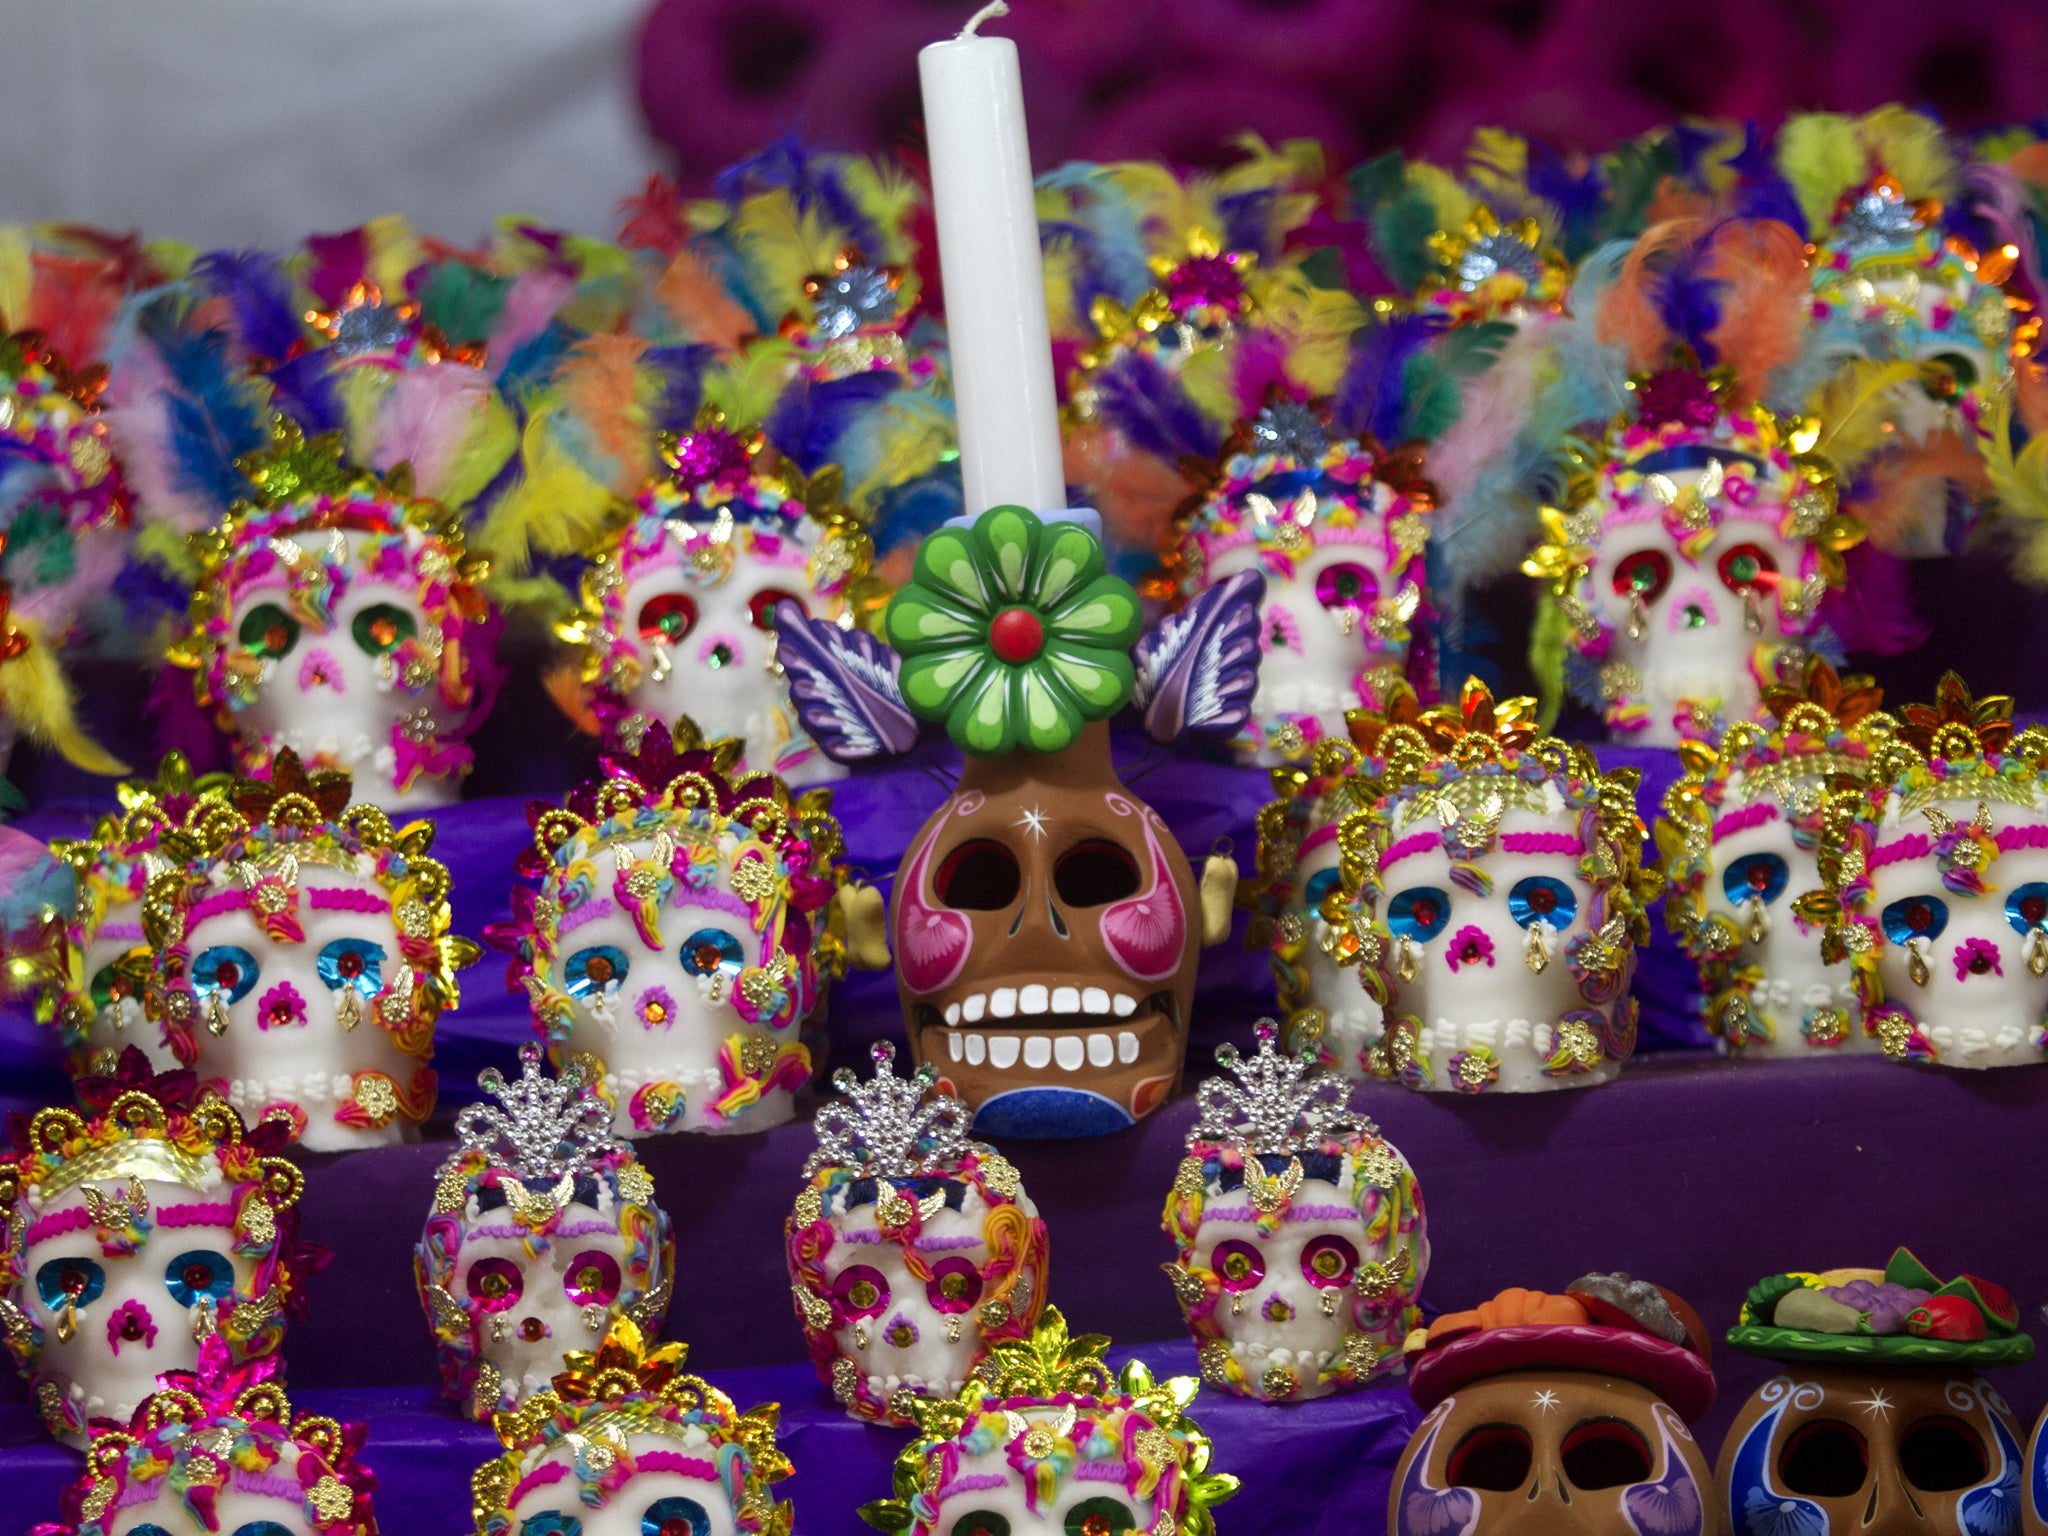 Traditional sugar skulls displayed in a Mexico market for Dia de los Muertos/Day of the Dead